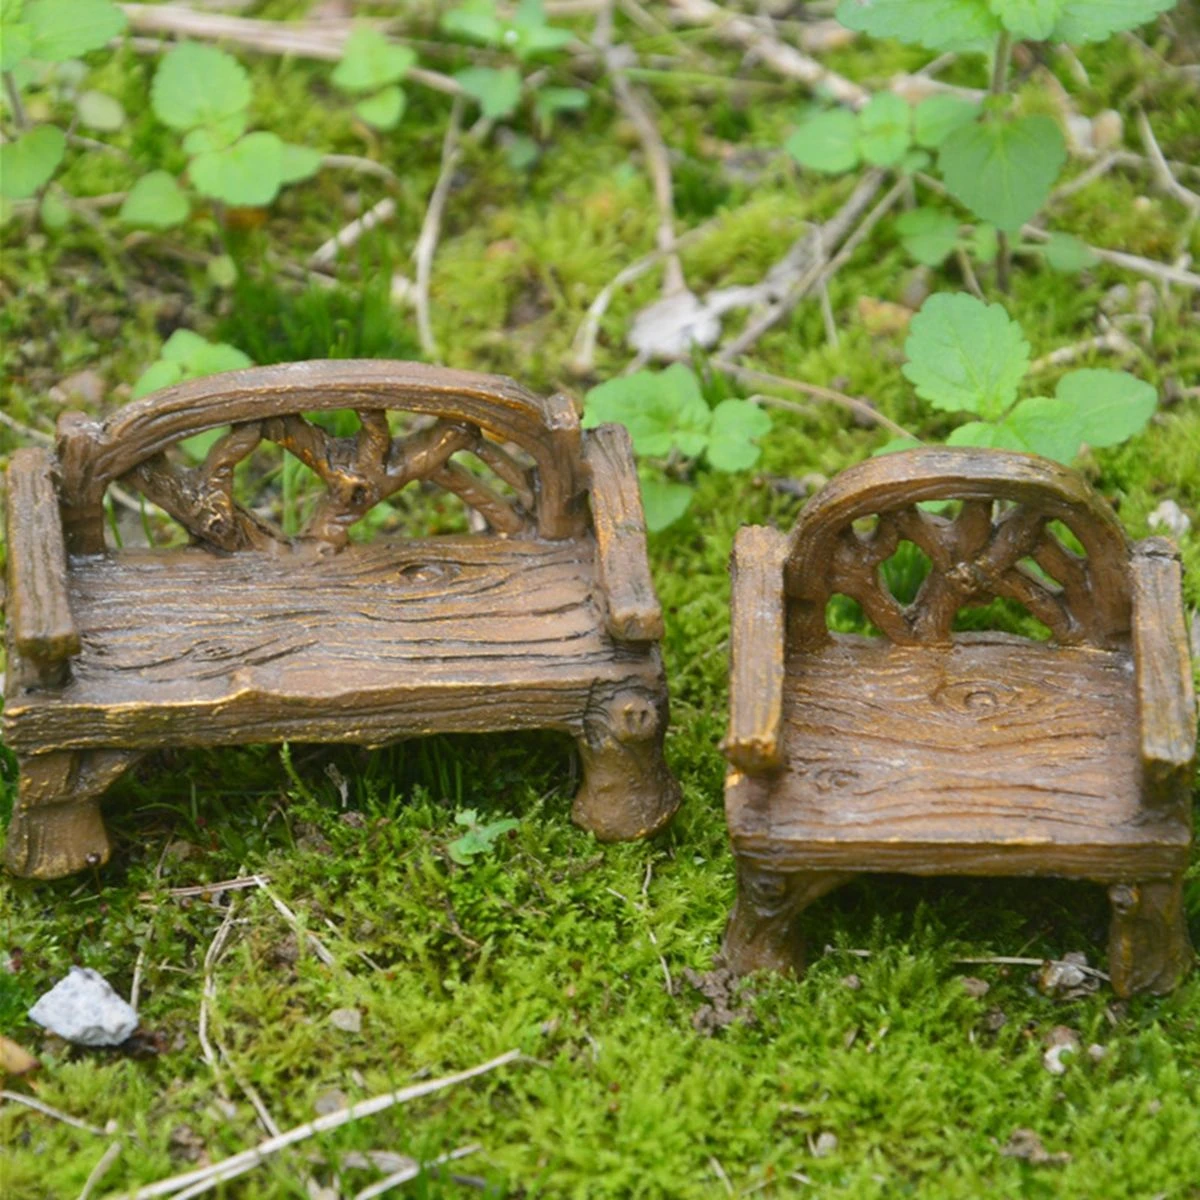 Mini Bench Model Resin Simulation Chair Miniature Fairy Garden Doll House Potted Design DIY Handicraft Home Decoration miniature ceramic cat figurines